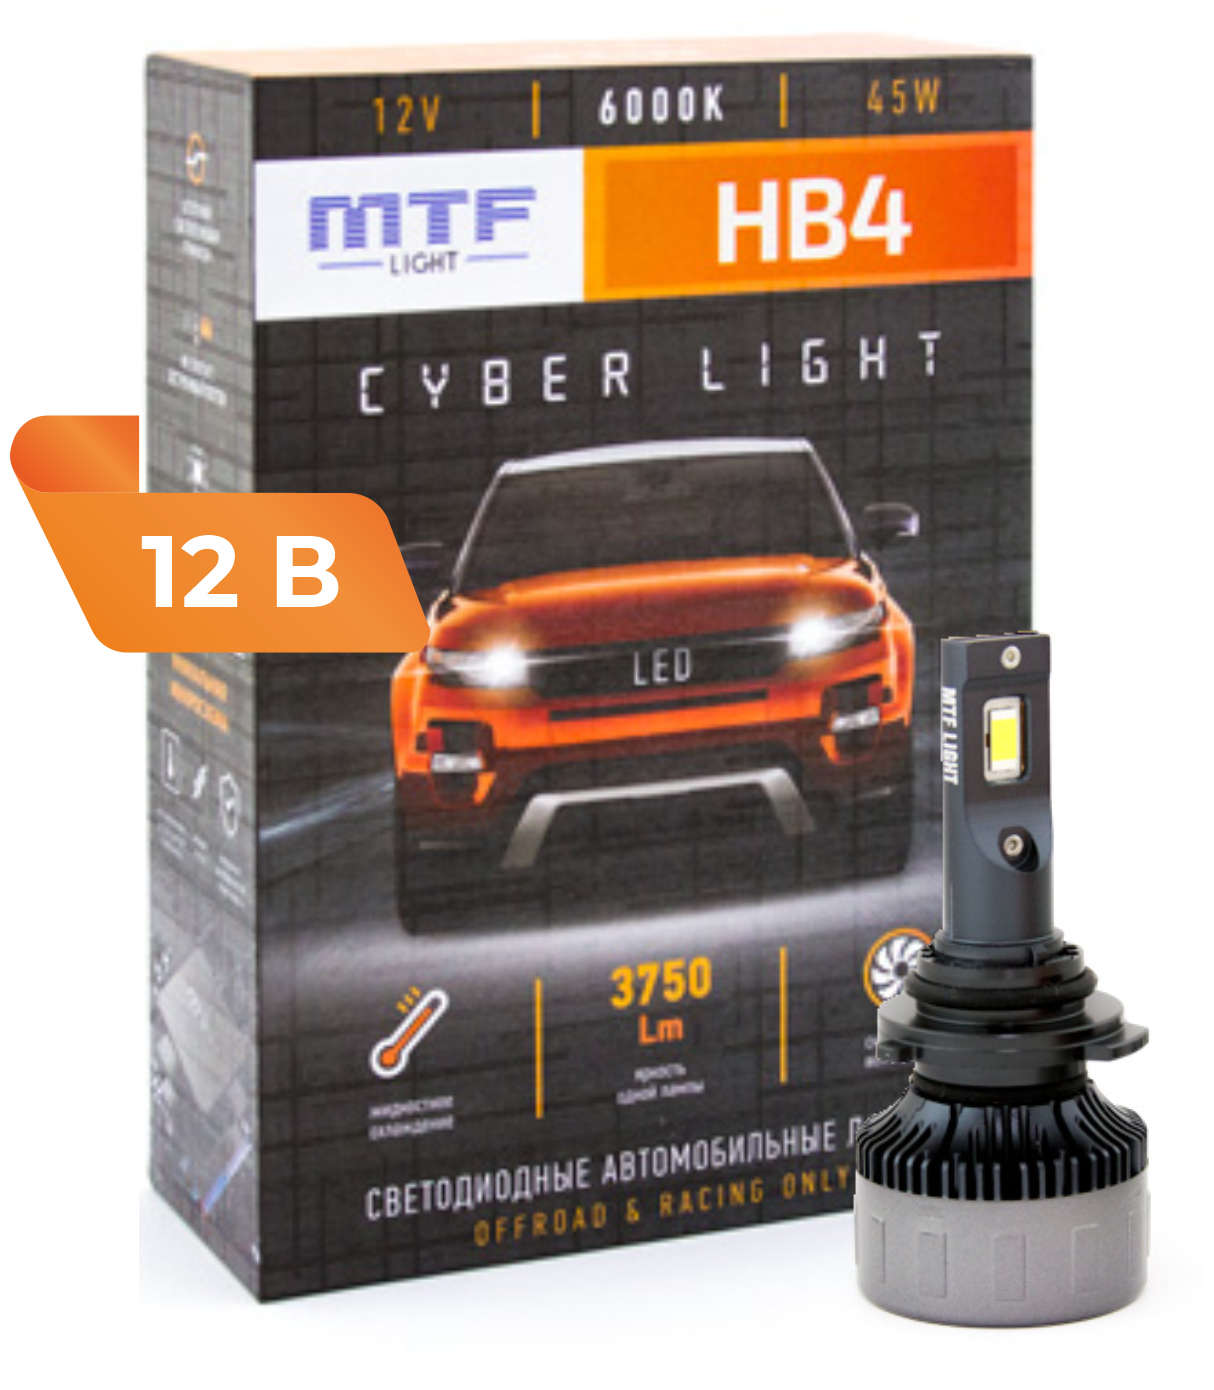 MTF Light Светодиодные лампы MTF Light, серия CYBER LIGHT, HB4(9006), 12V, 45W, 3750lm, 6000K, кулер, комп.